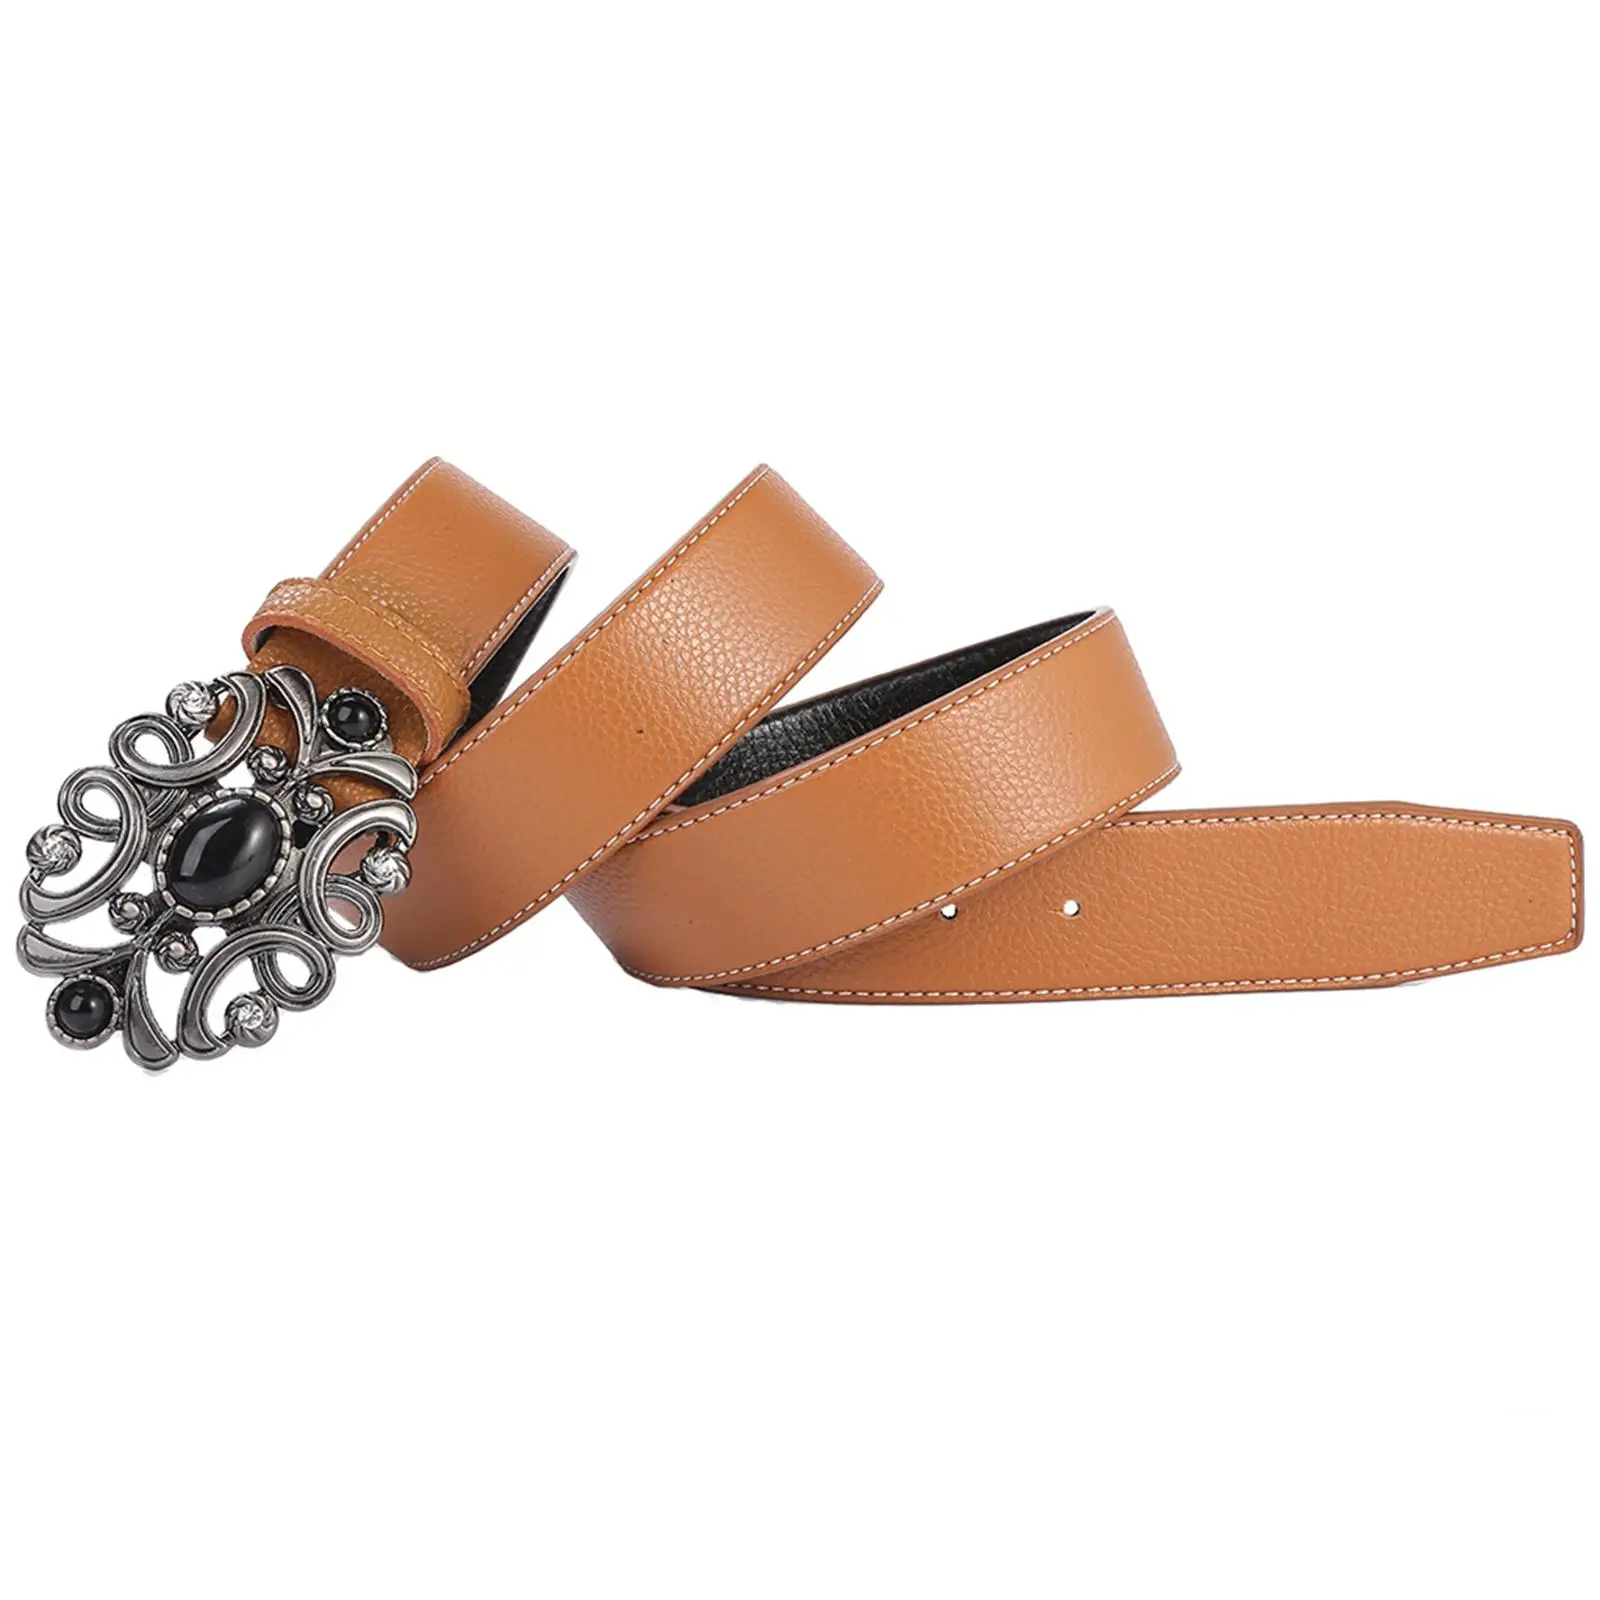 120cm PU Leather Belt Floral Engraved Buckle Reusable Waist Belt Fashion Strap Western Belt for Stage Props Cosplay Adult Cowboy